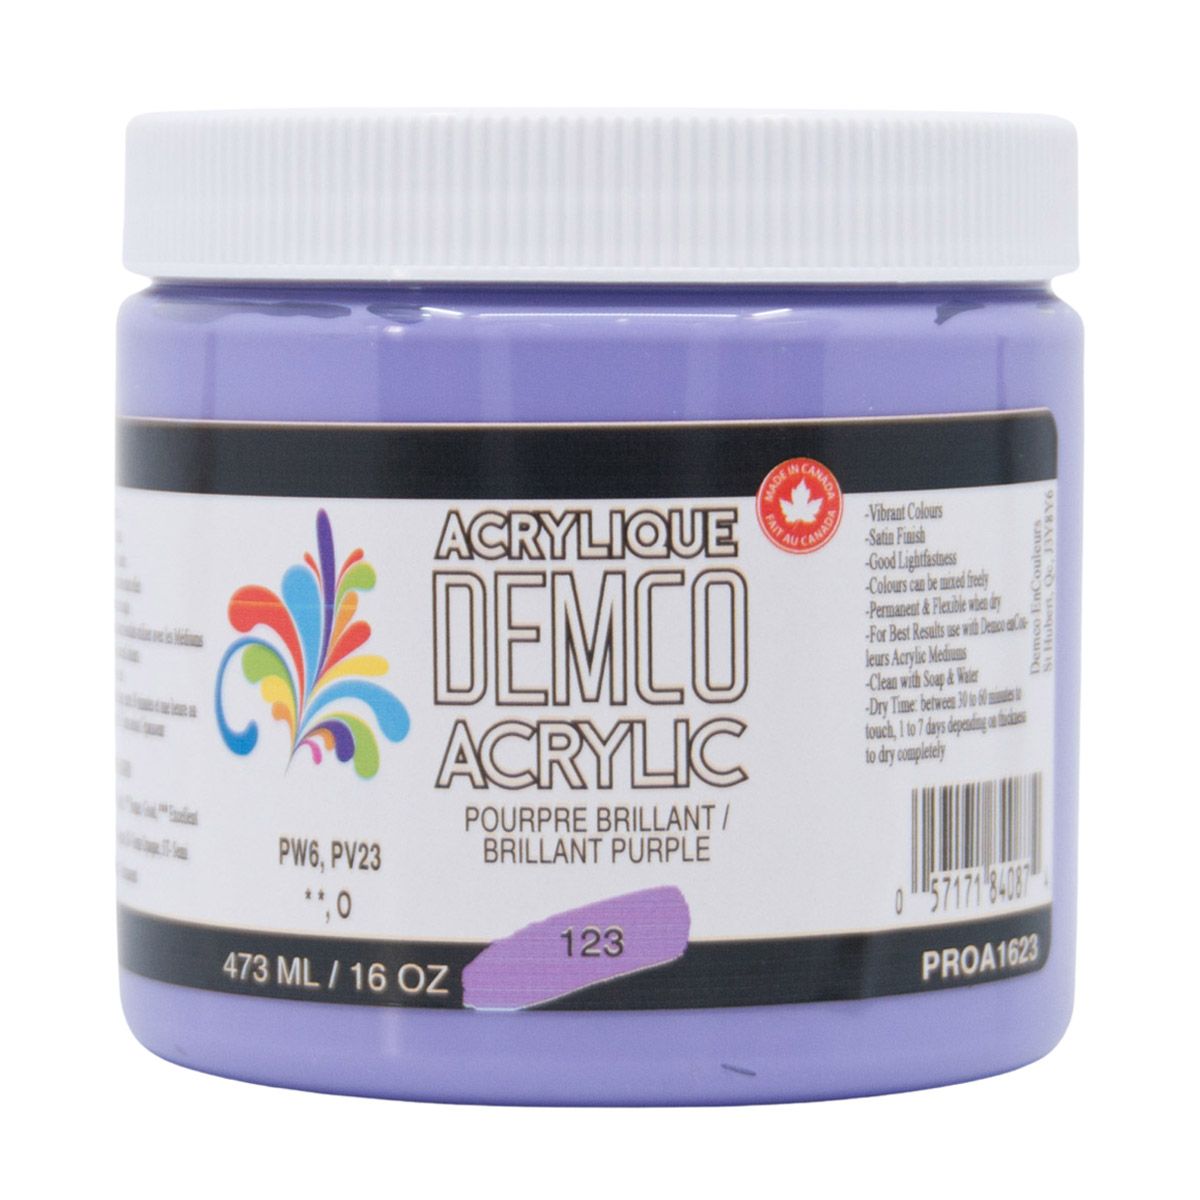 Demco Acrylic Brilliant Purple 473ml/16oz